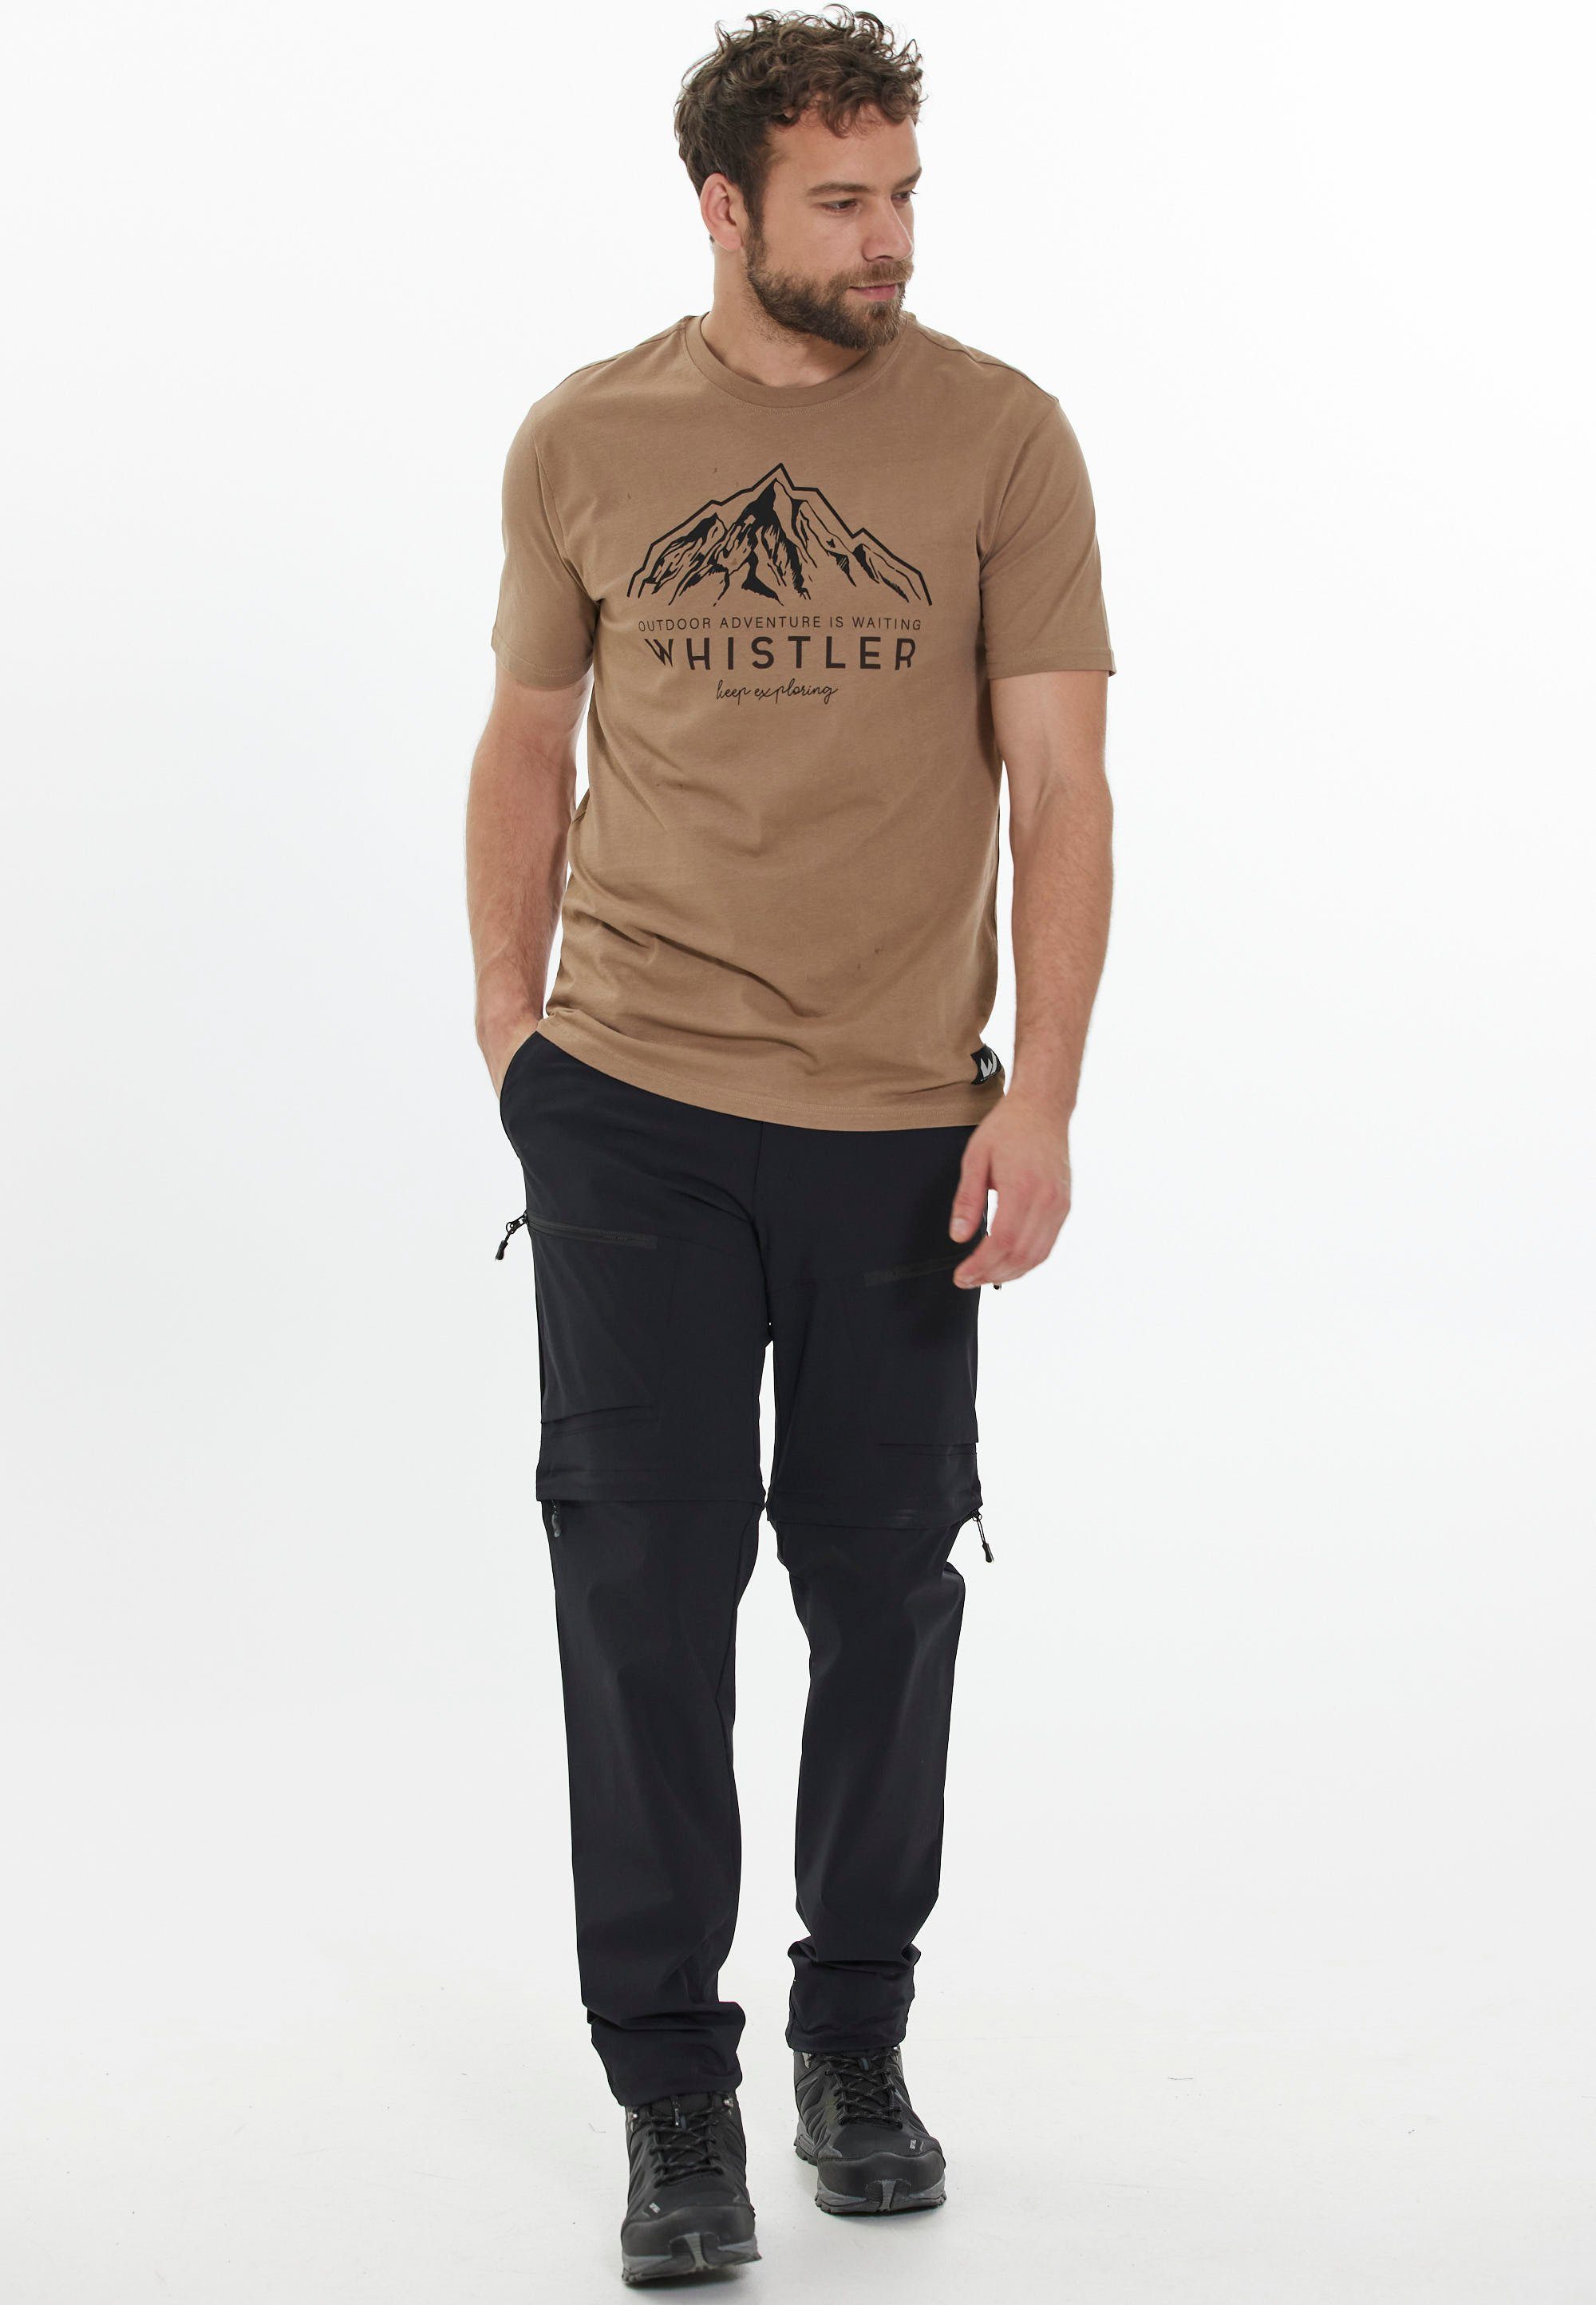 Walther WHISTLER mit stilvollem Frontprint hellbraun T-Shirt